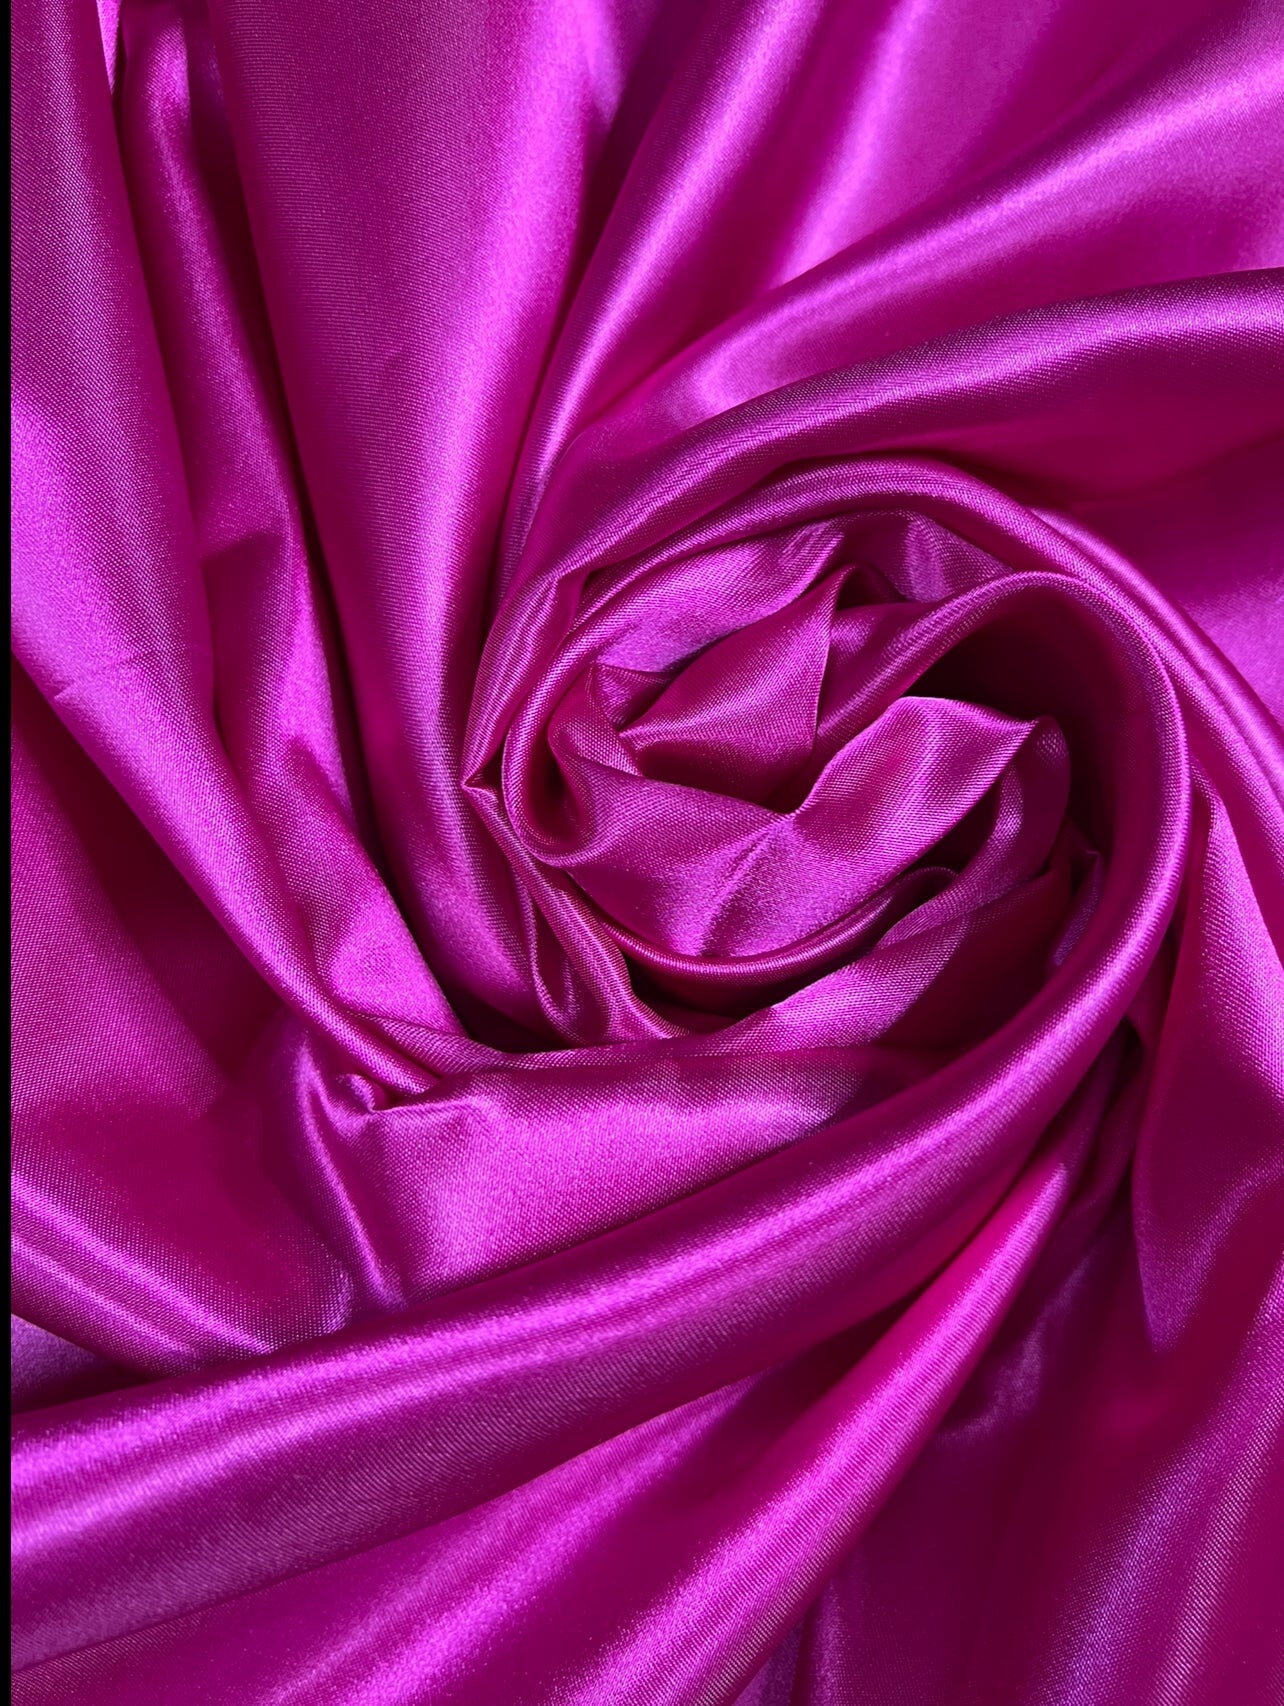 fuchsia satin, hot pink satin, pink satin, burgundy satin, kikitextiles,online satin store, luxury fabric online, fuchsia fabric online, fuchsia color for bridal dress